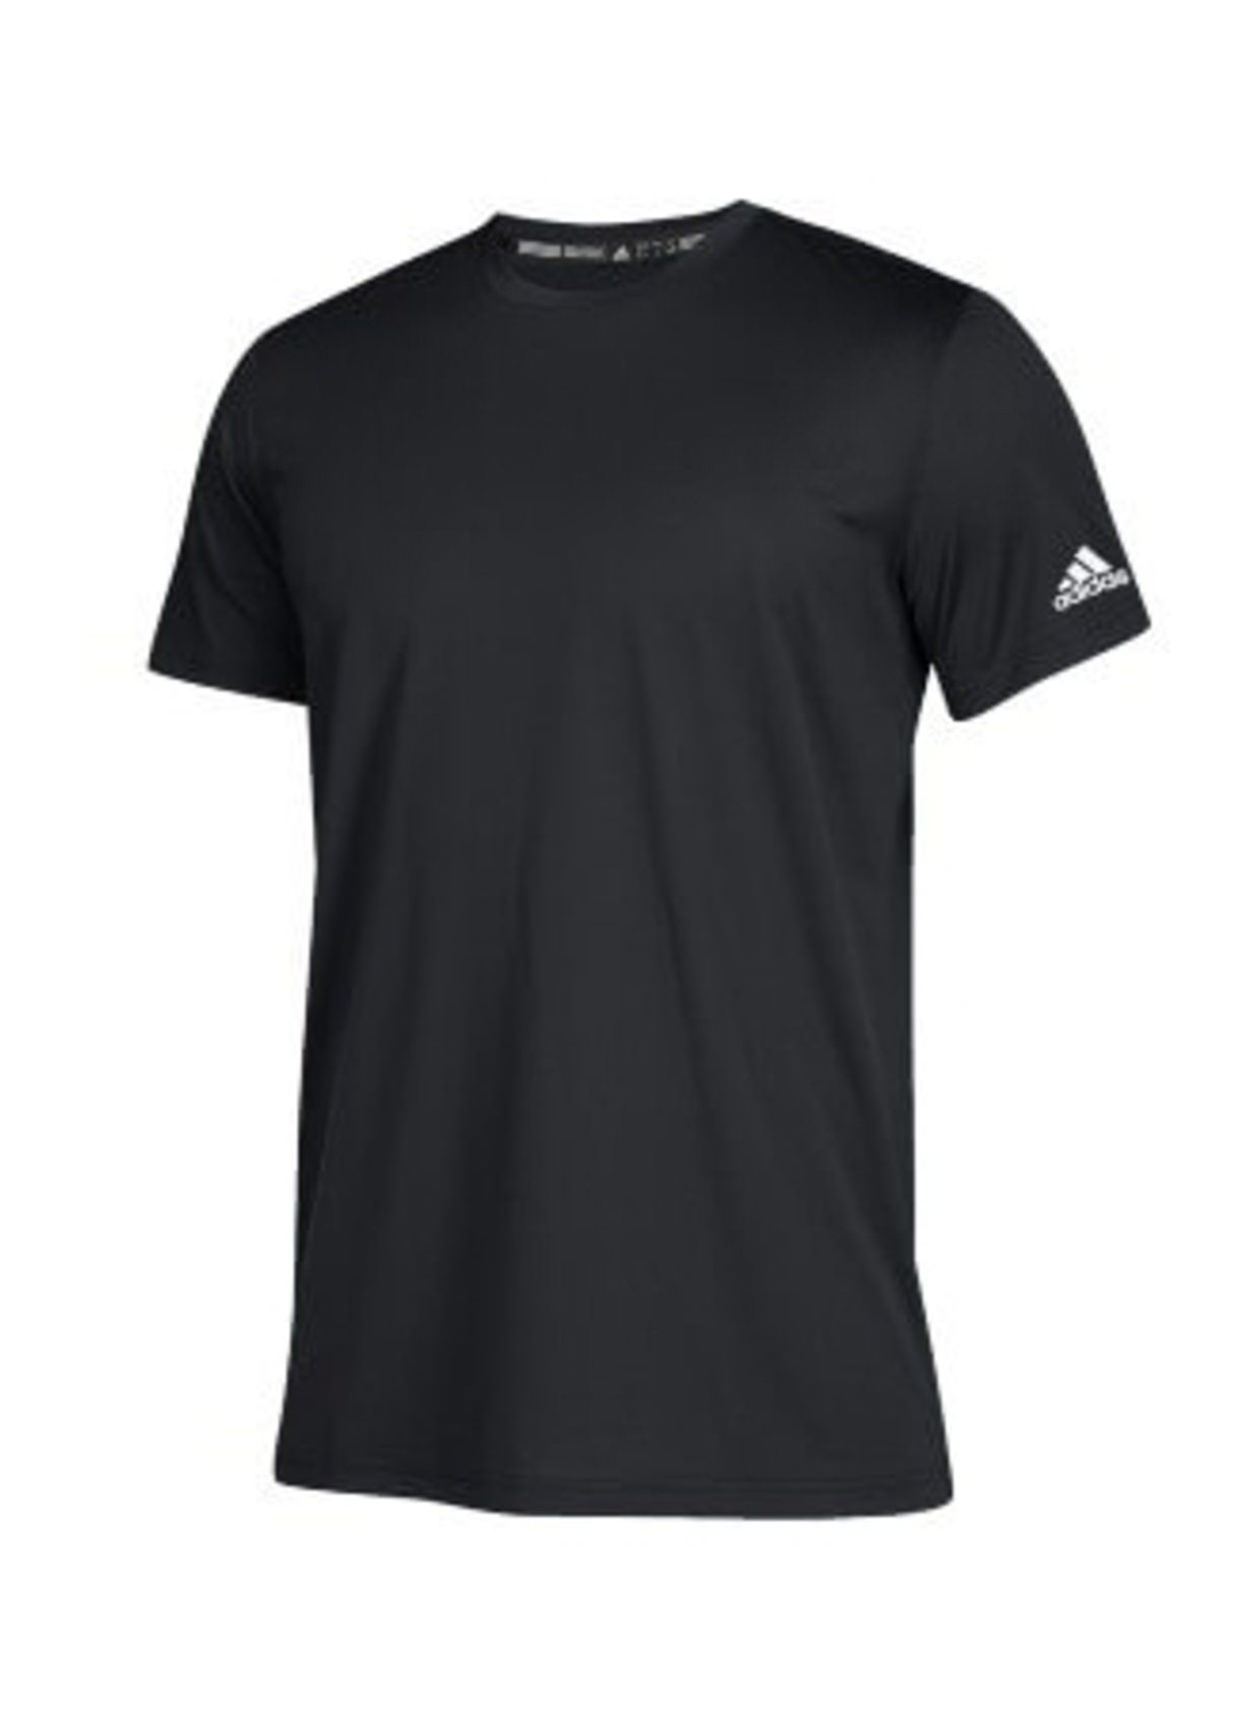 Custom T-shirts  Screen Printed Adidas Men's Black Clima Tech T-Shirt